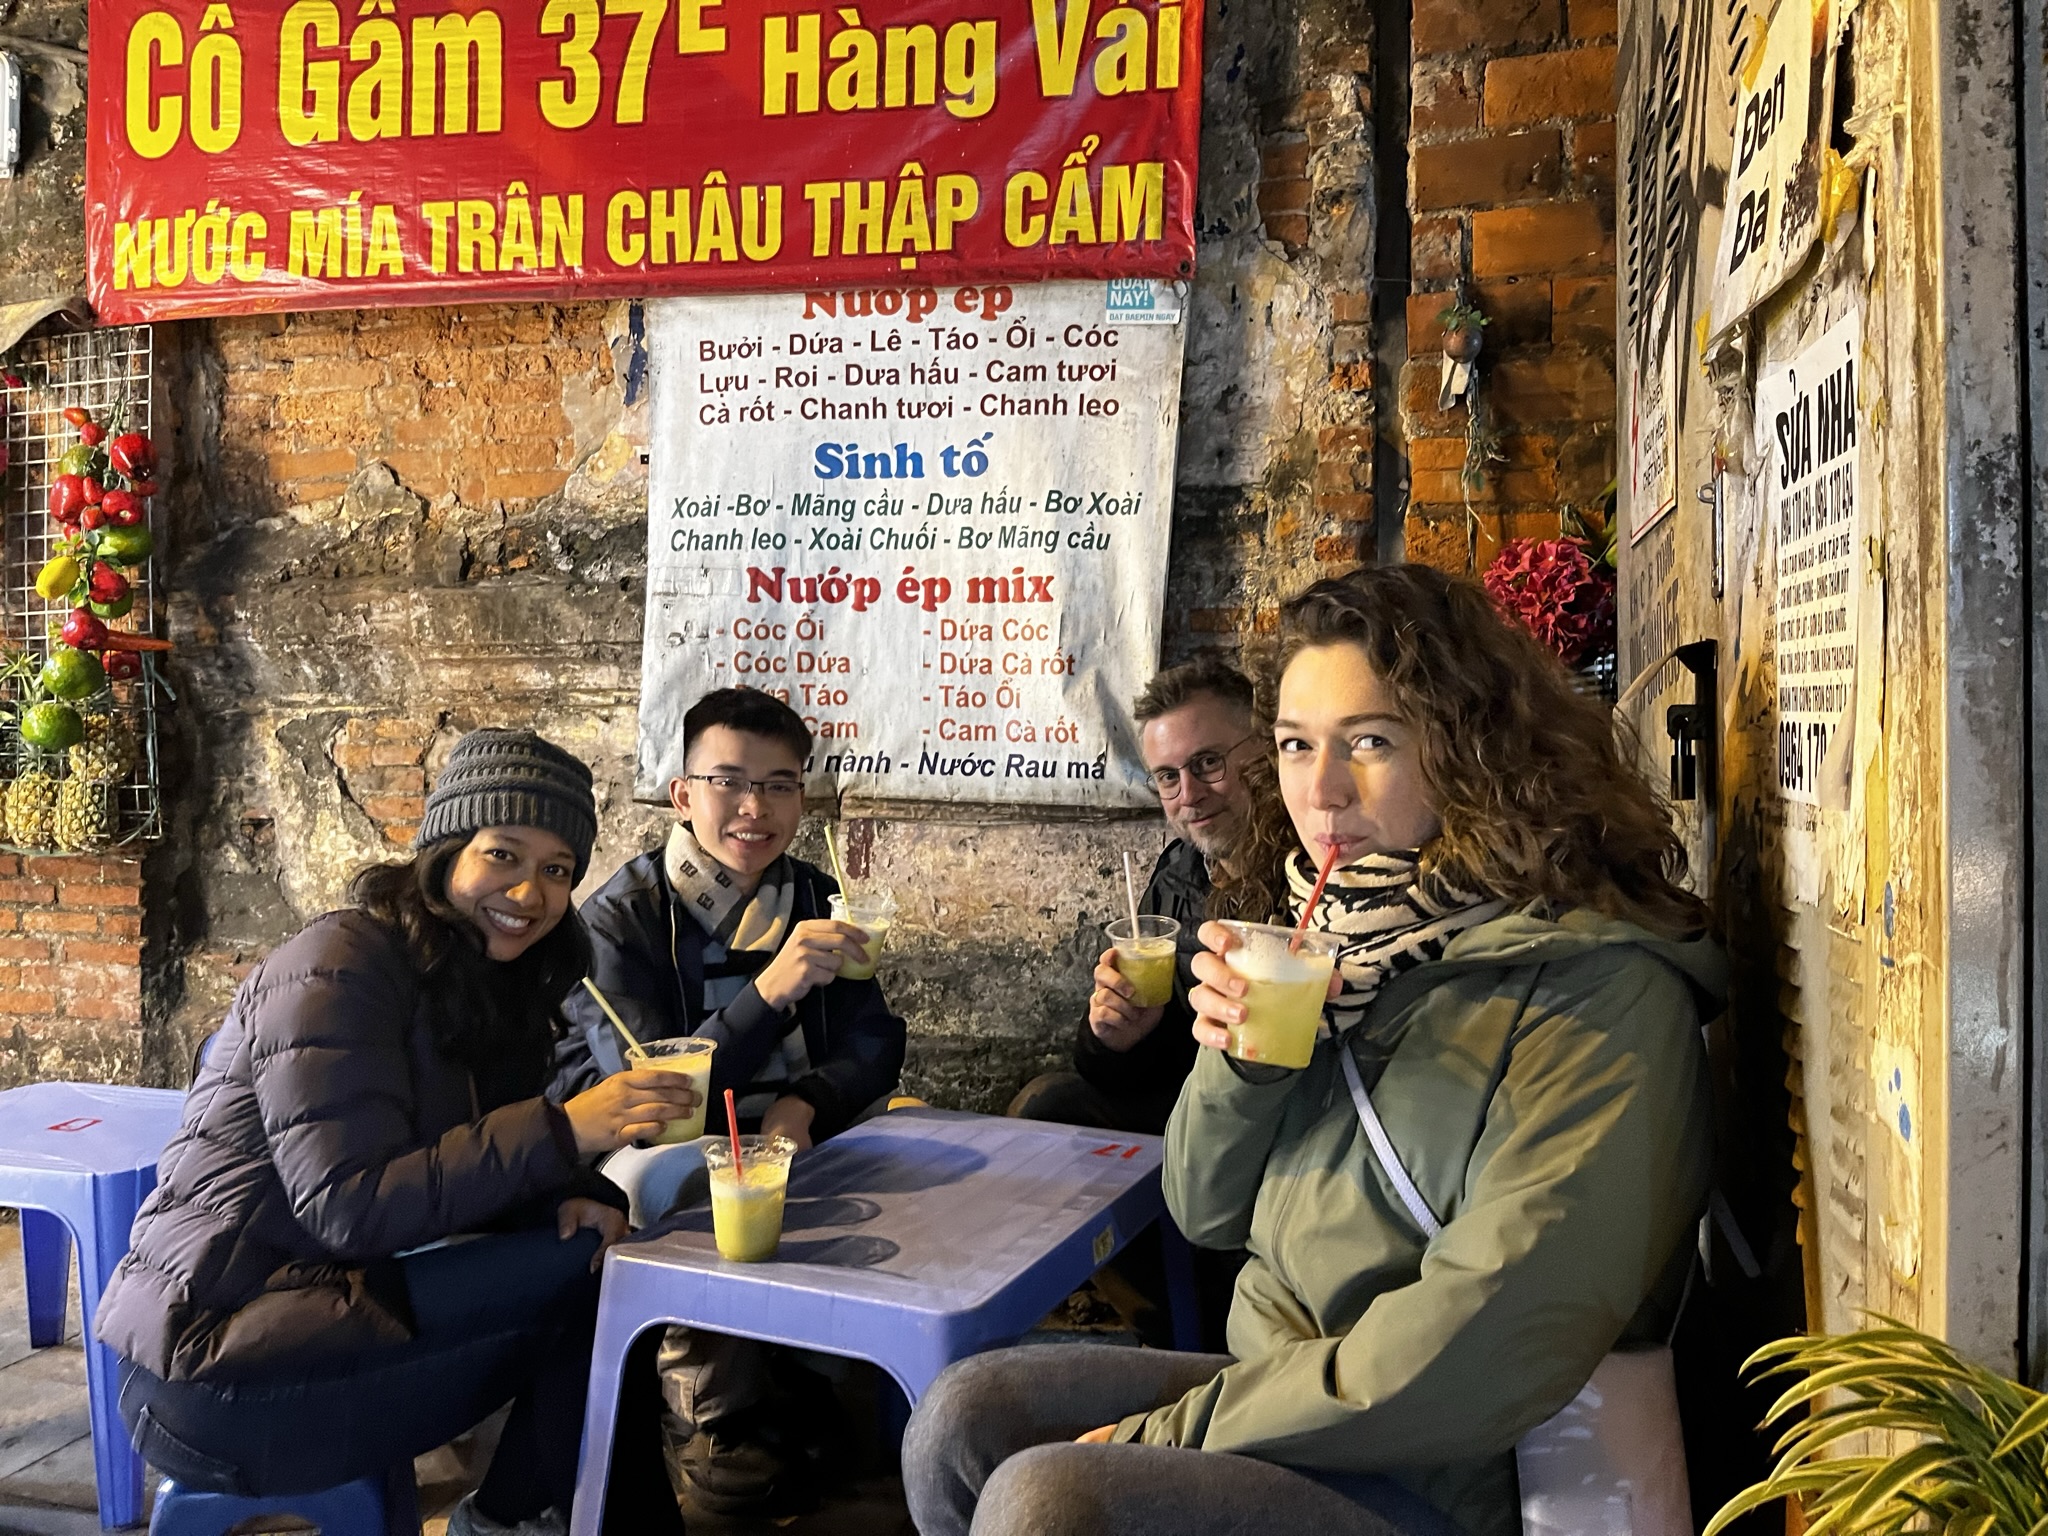 hanoi street food tour 2 Hanoi Vegetarian Street Food Tour & Stories (have a Vegan option)